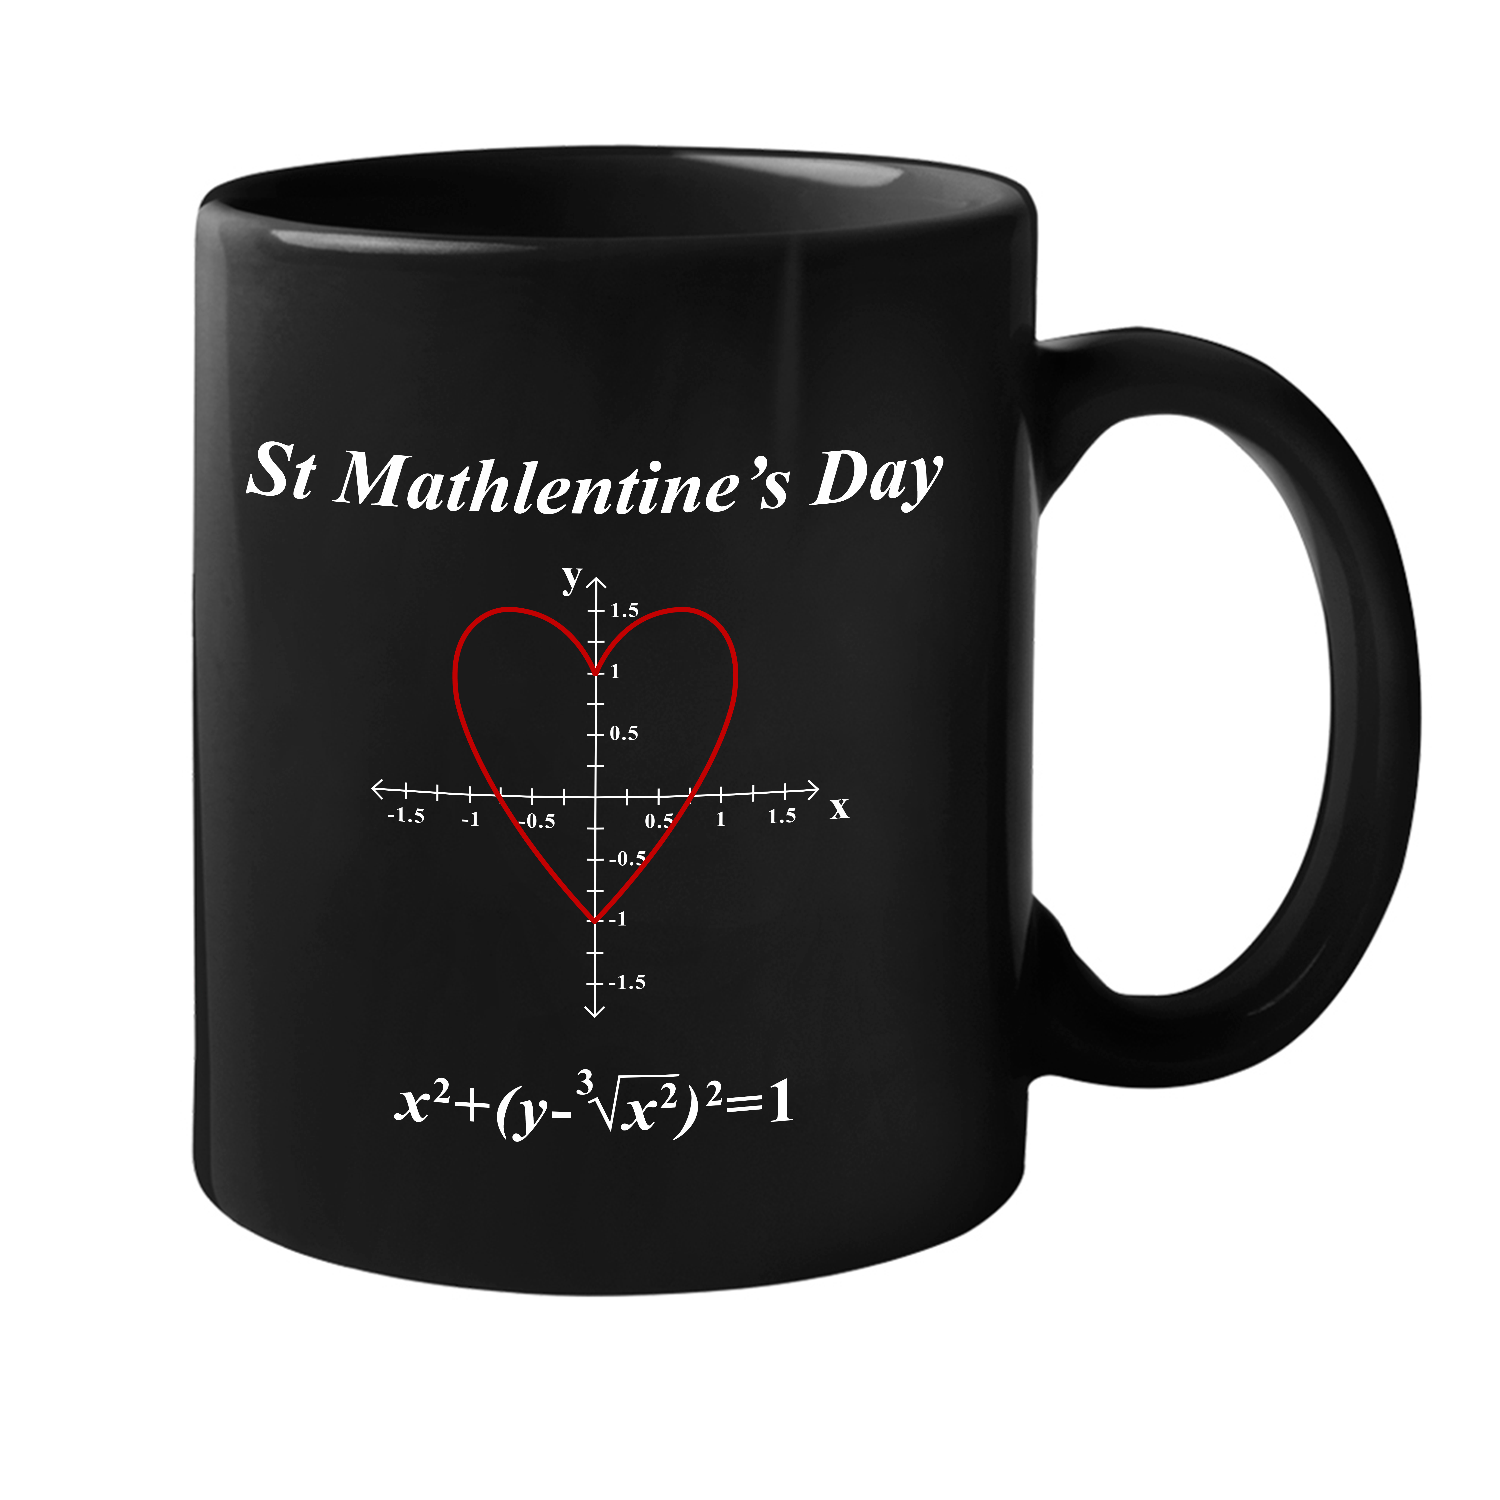 St Mathlentines - Mug 11 oz